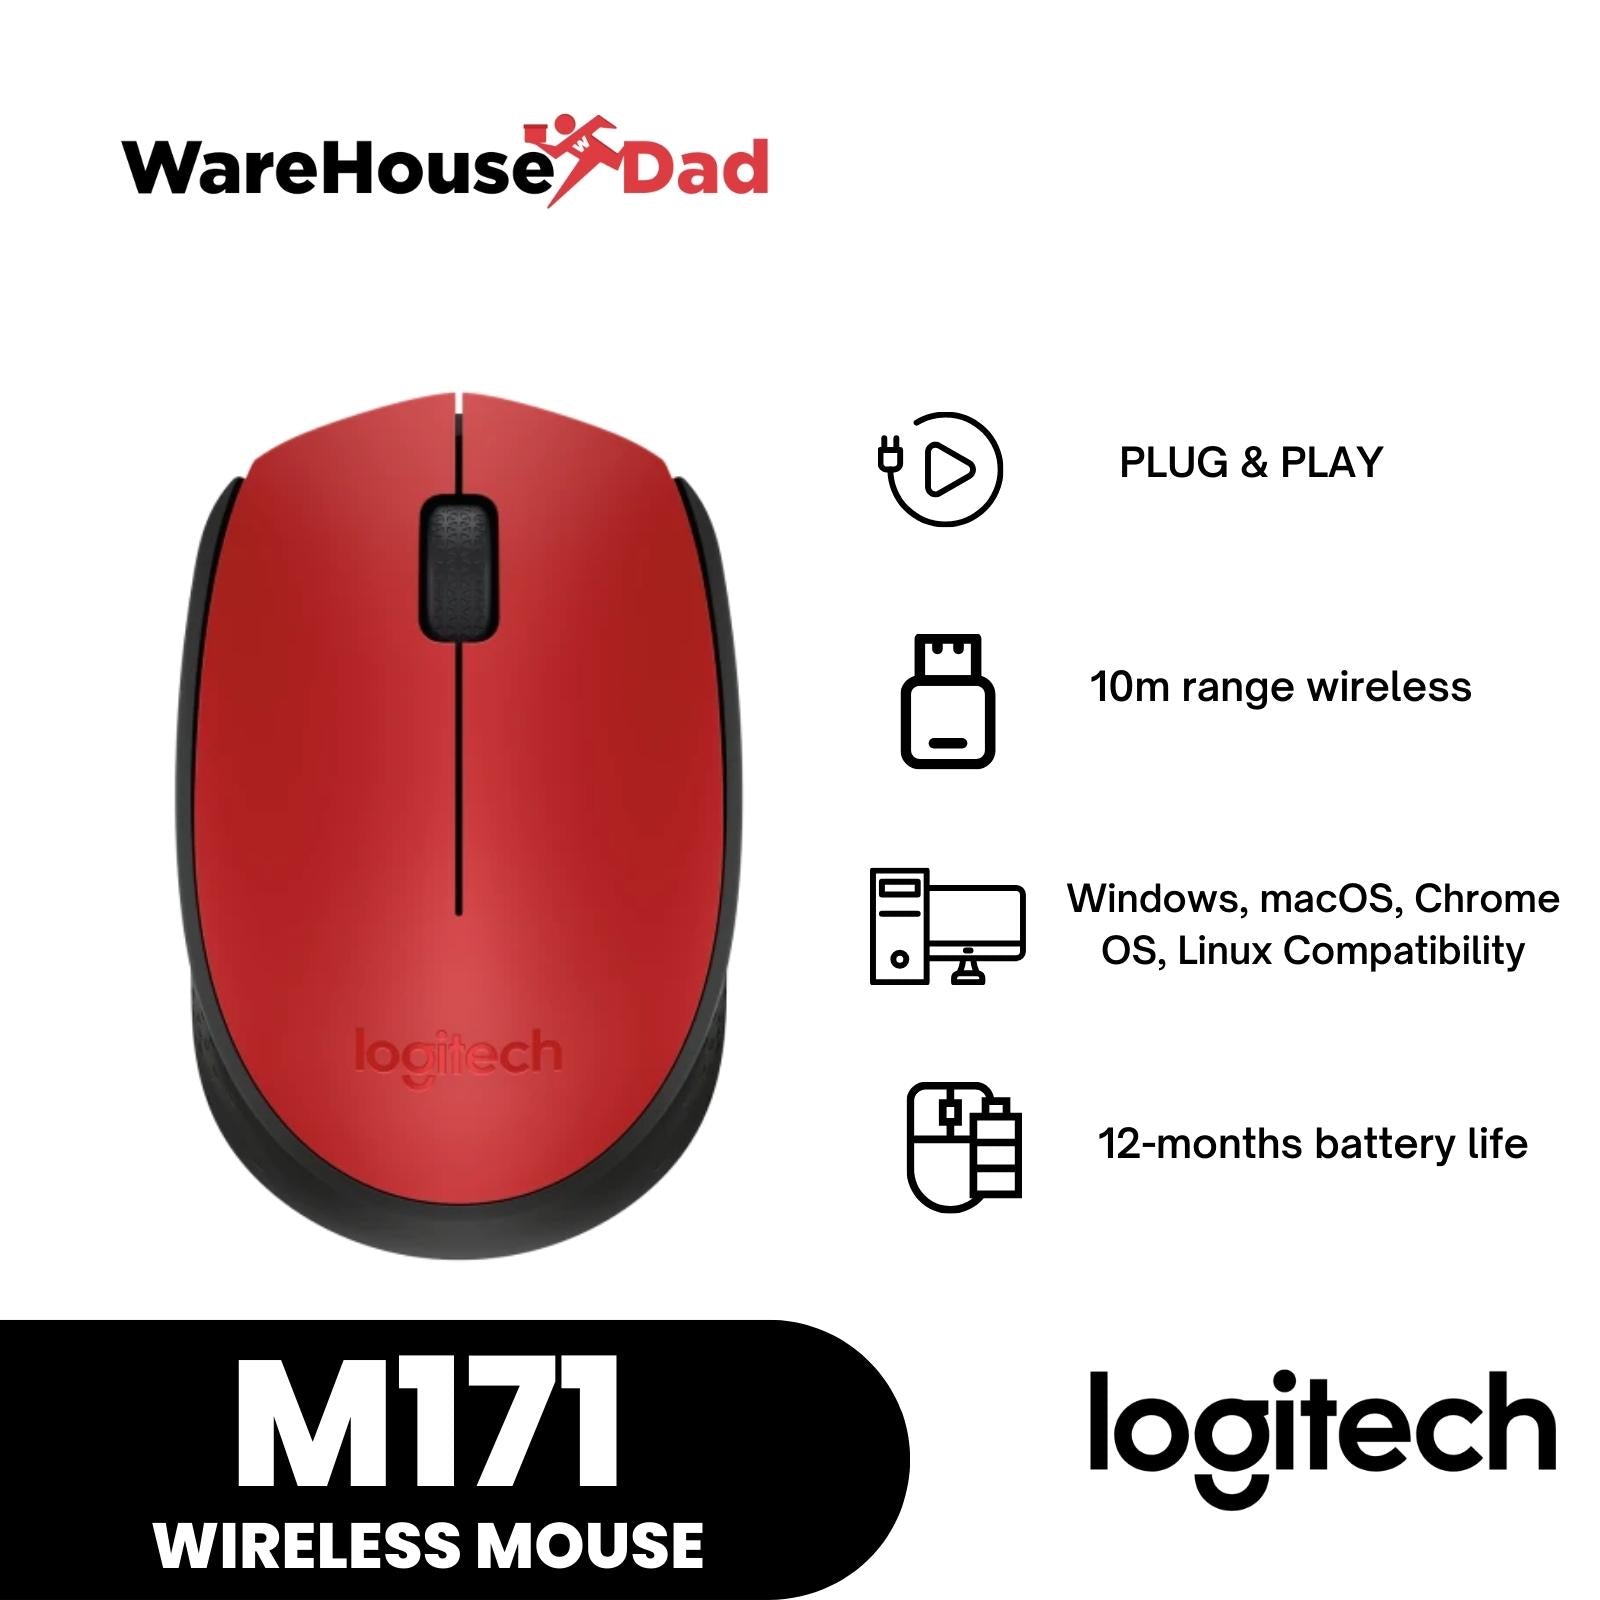 & – Simplicity Mouse Play WarehouseDad M171 Wireless Logitech Plug